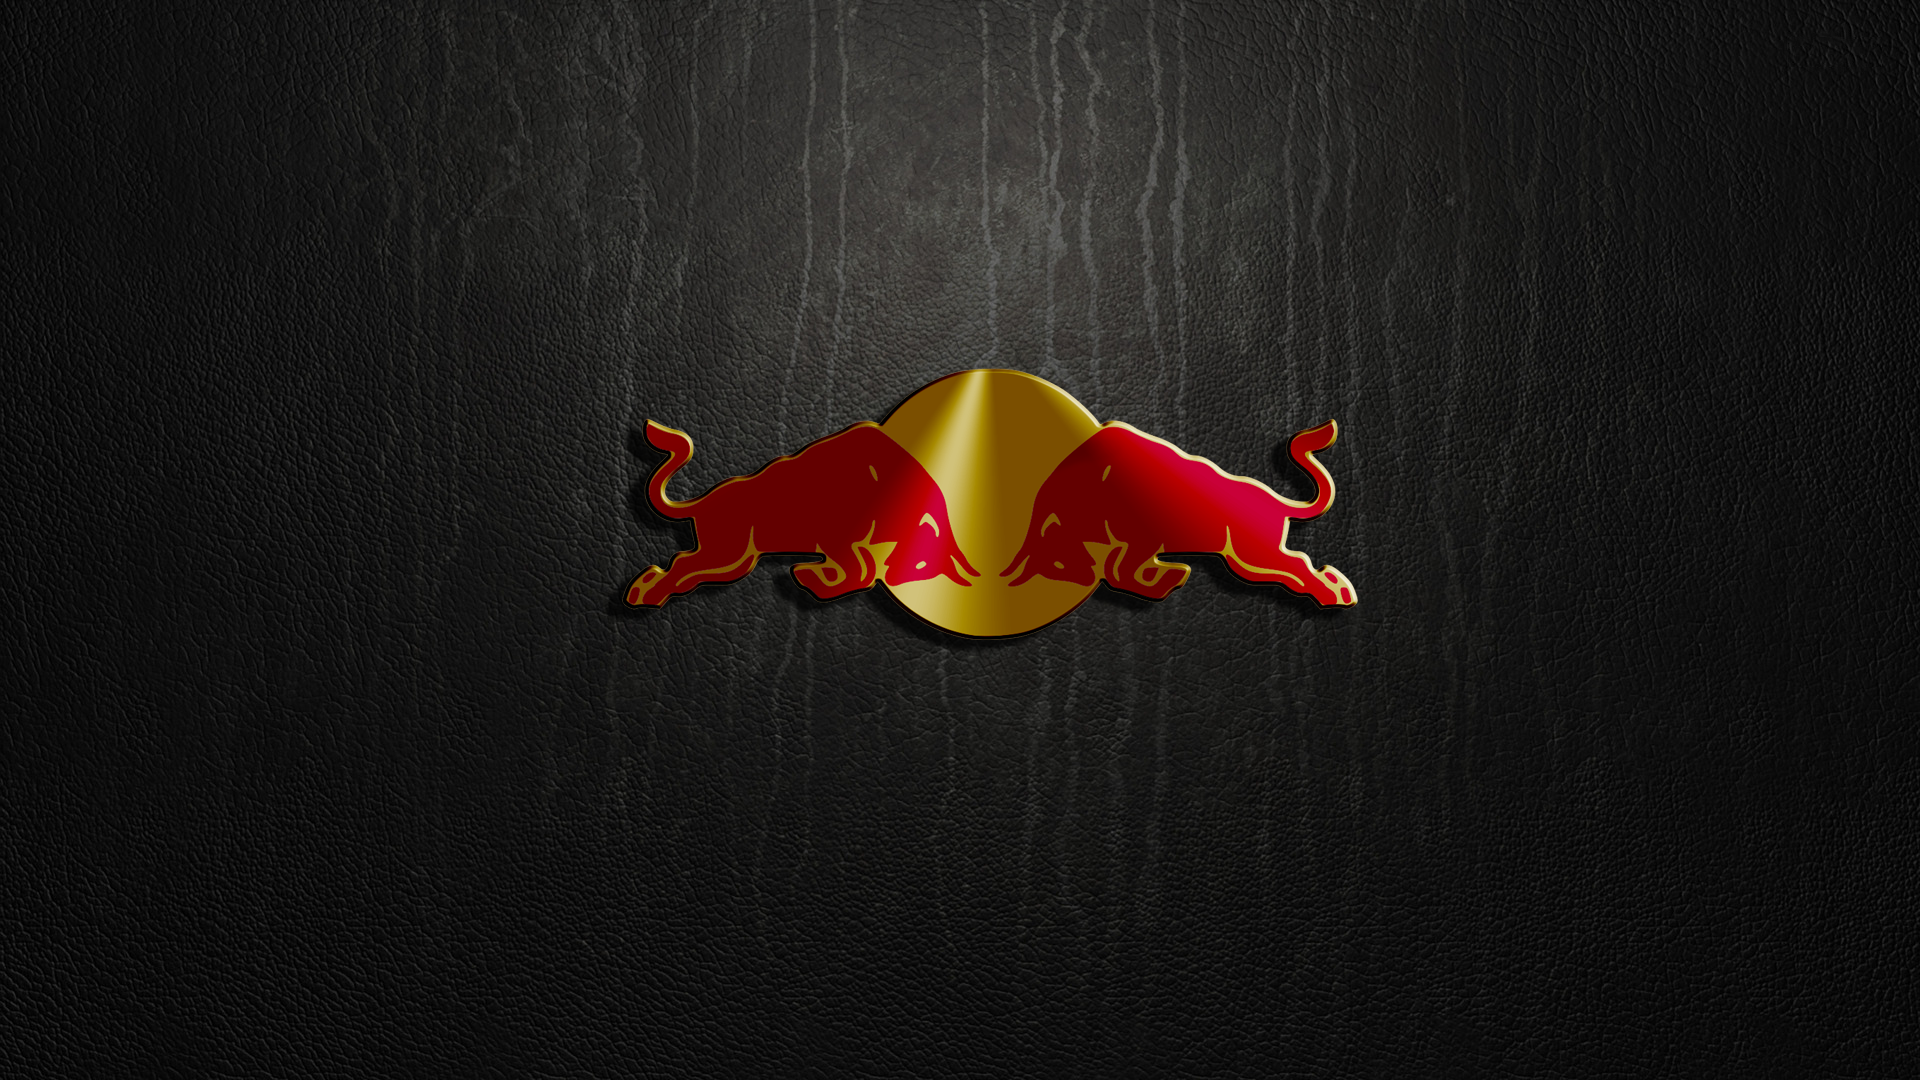 Pics Photos Red Bull Wallpaper Logo